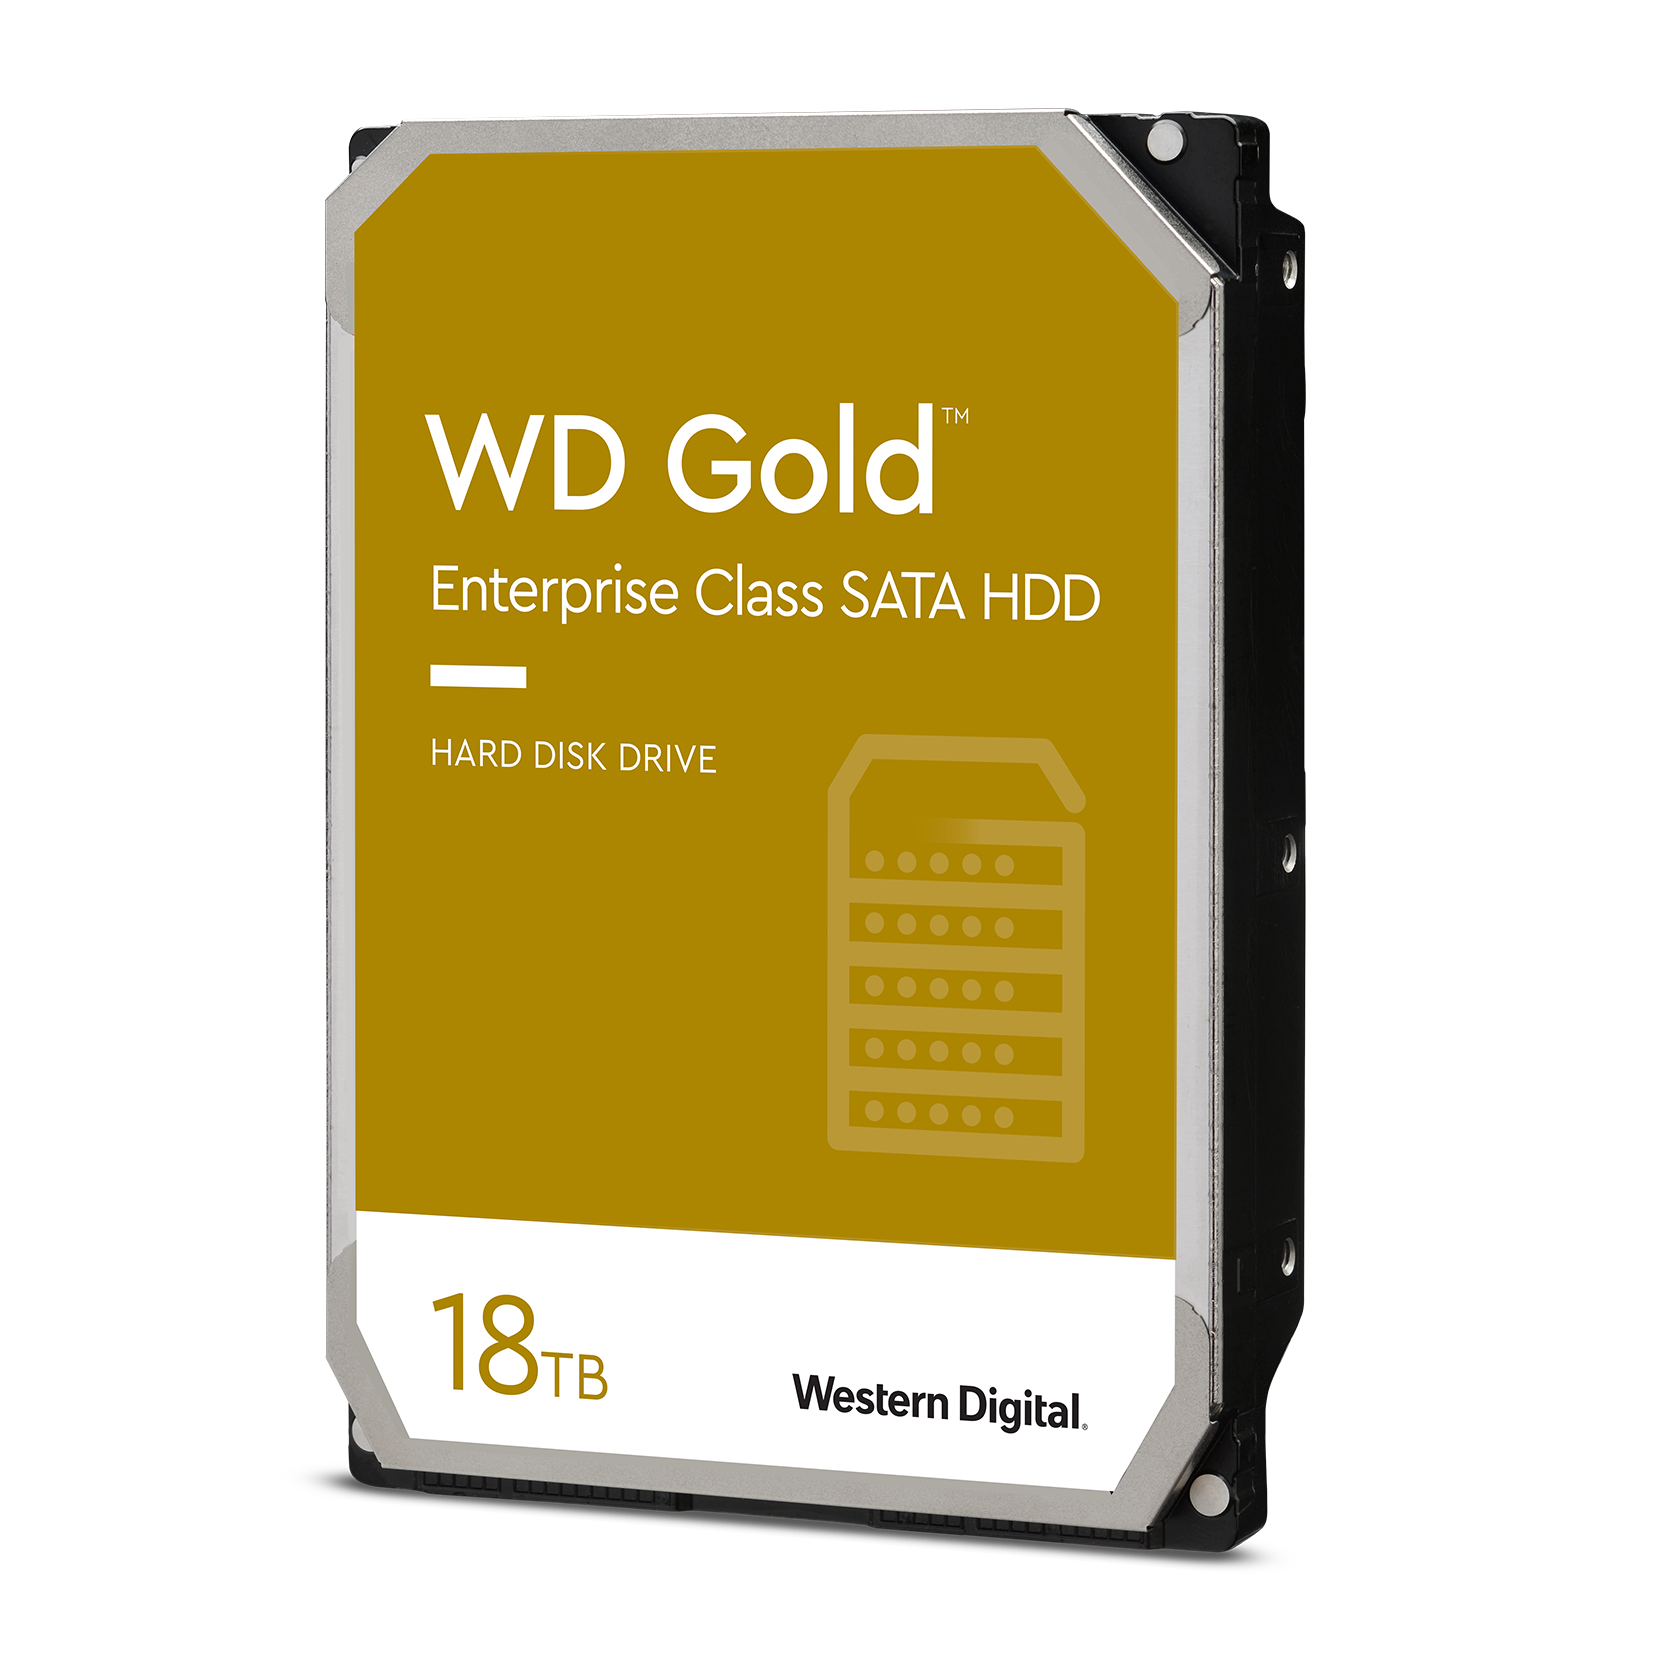 Western Digital 18TB WD Gold™ Enterprise Class SATA HDD - Internal Hard Drive - WD181KRYZ